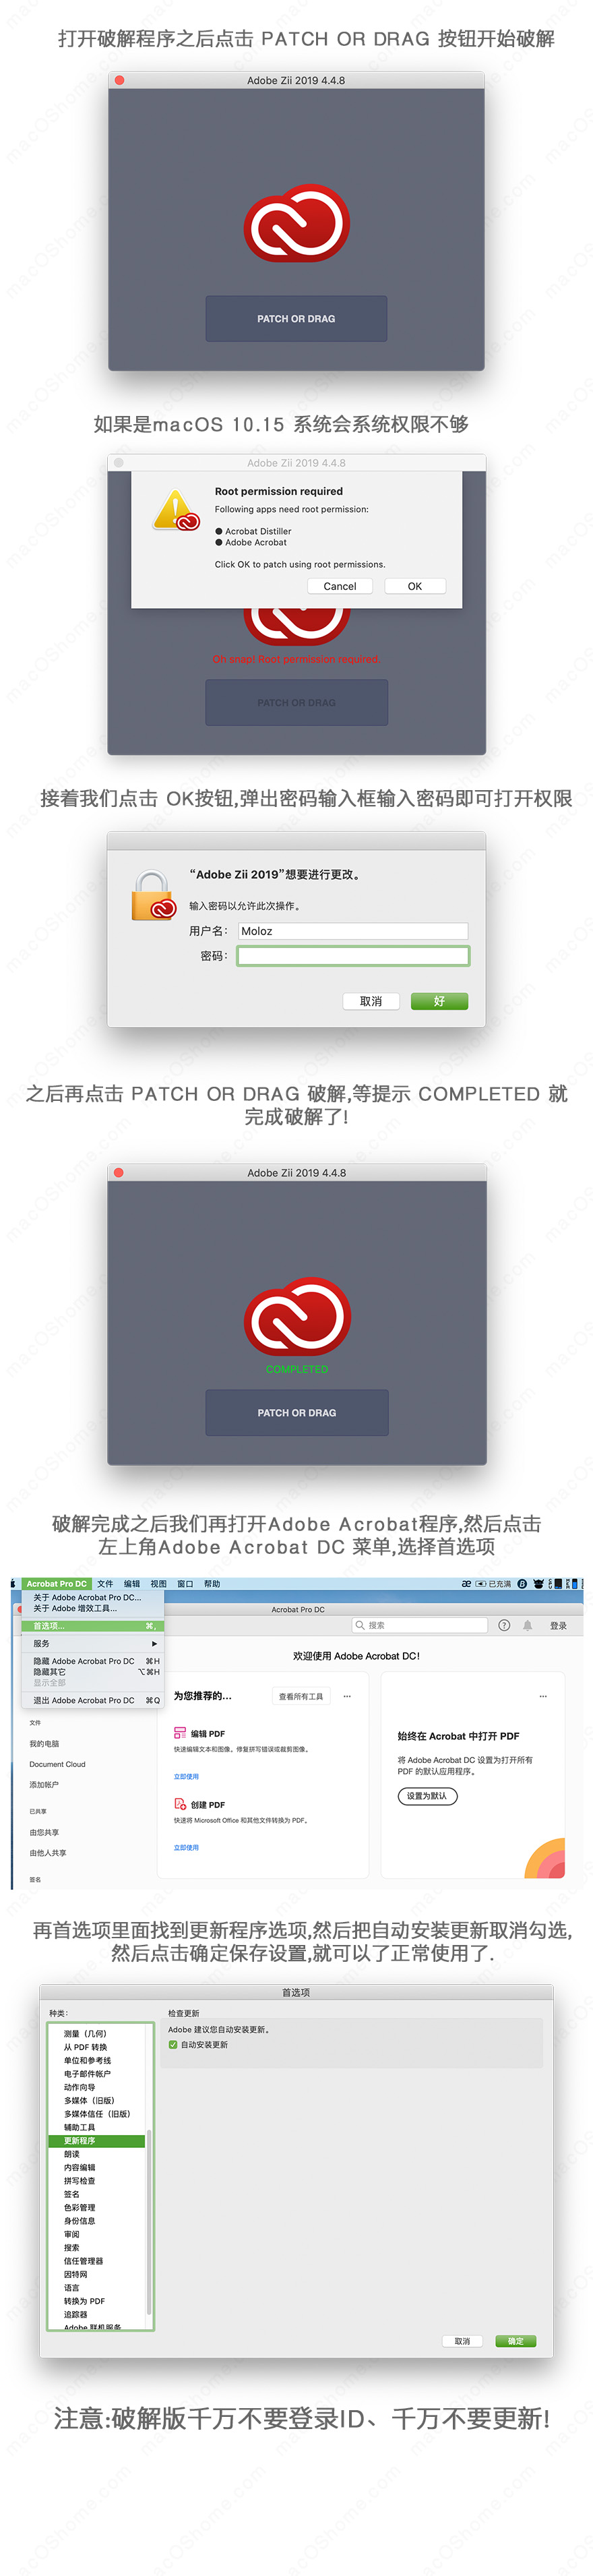 Adobe Acrobat Pro DC for Mac v2019.021 中文版